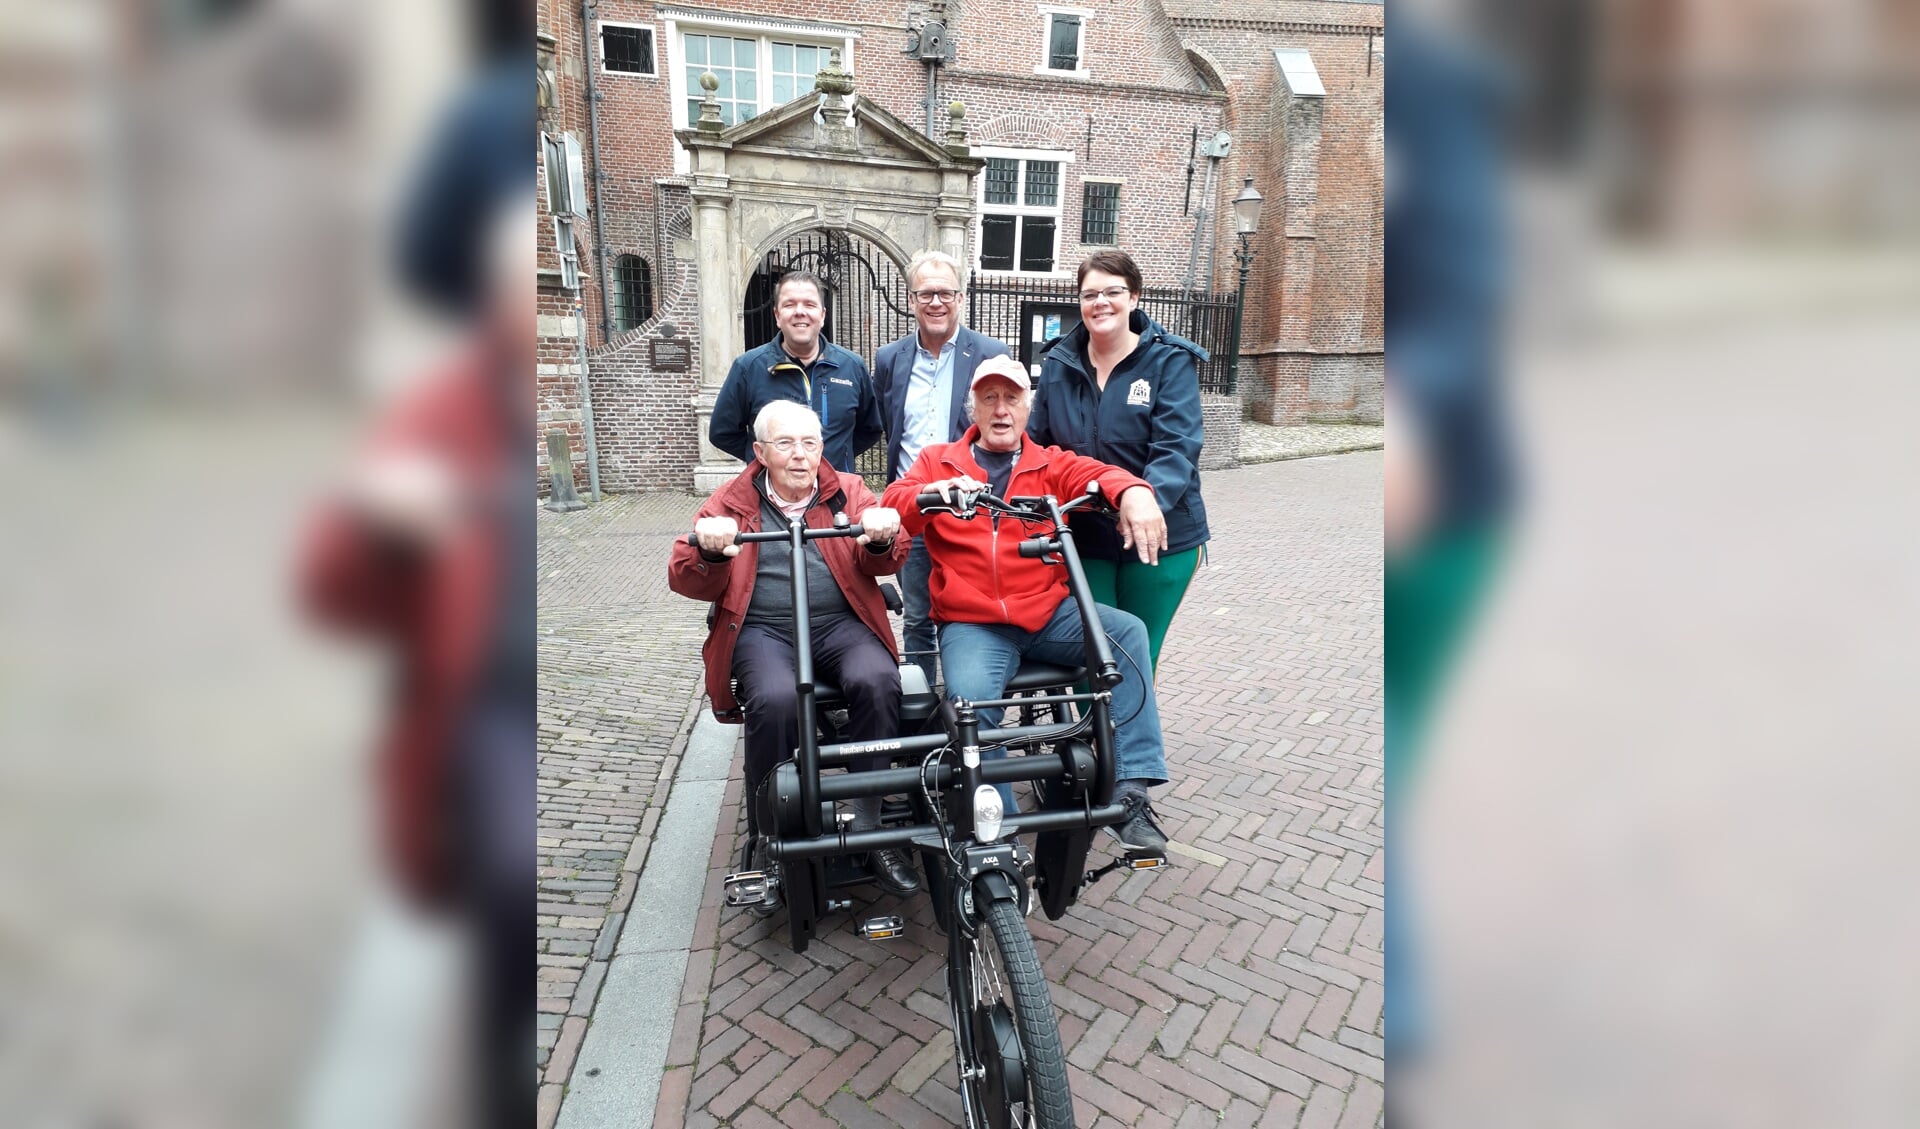 Kees van Stek, Douwe Boeijenga, Marjan Bielsma (boven v.l.n.r.) en op de fiets de heer De Wolf en Wil. (Foto: aangeleverd)